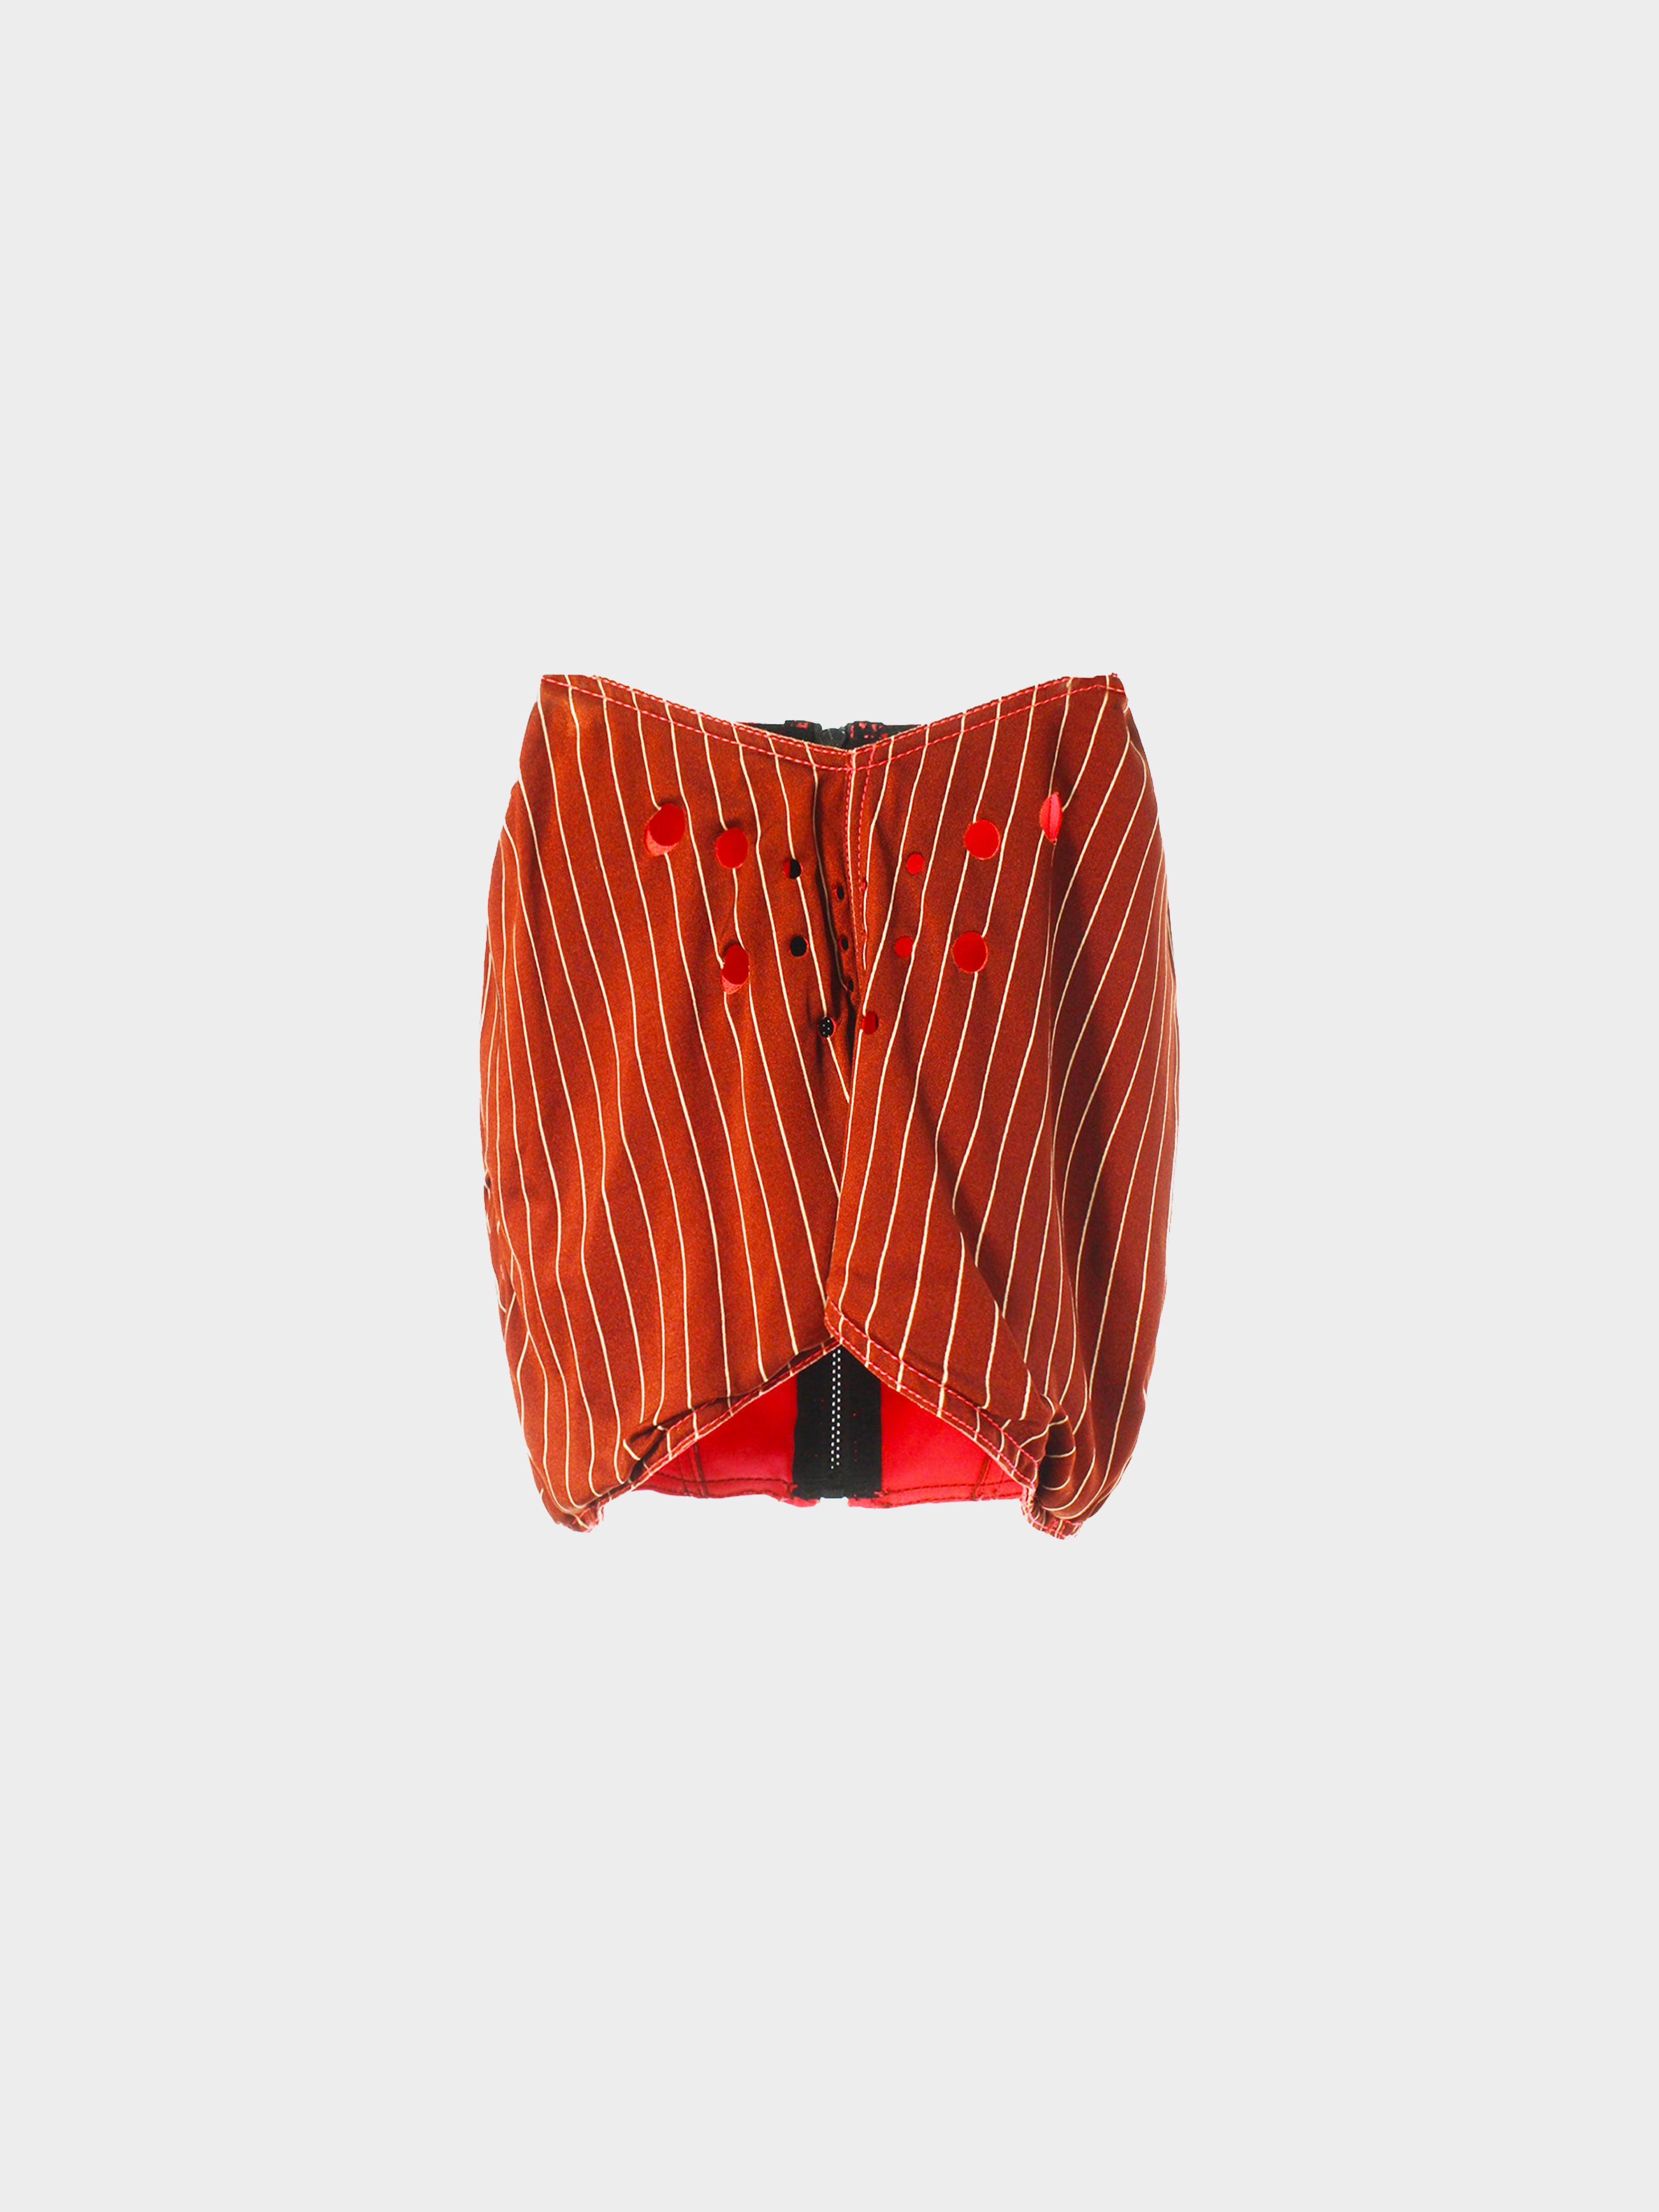 Jean Paul Gaultier 1990s FEMME Red Pinstripe Skirt